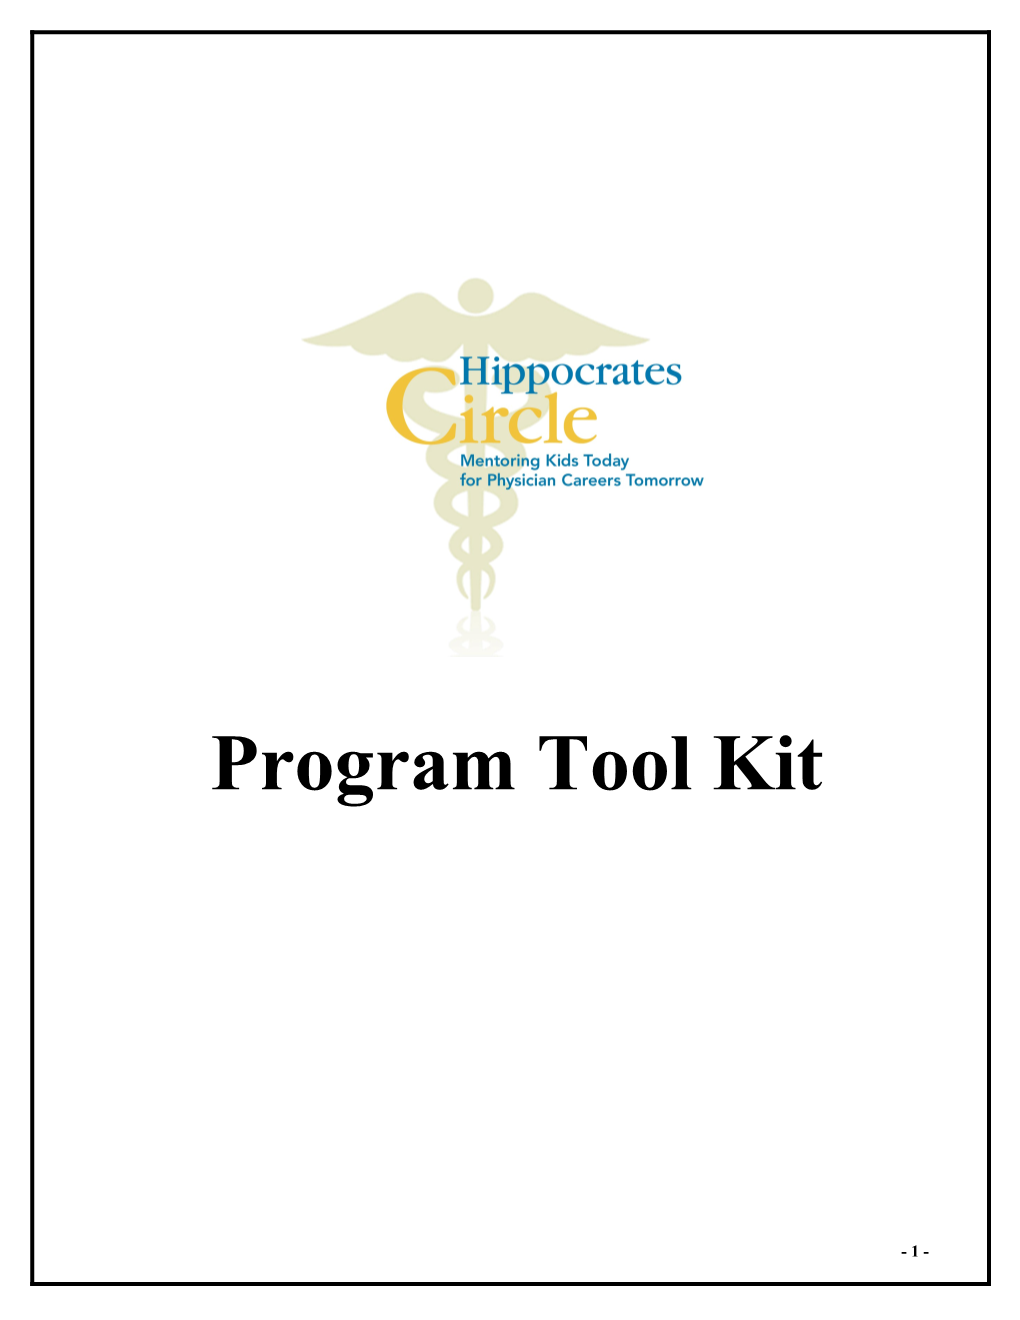 The Hippocrates Circle Program